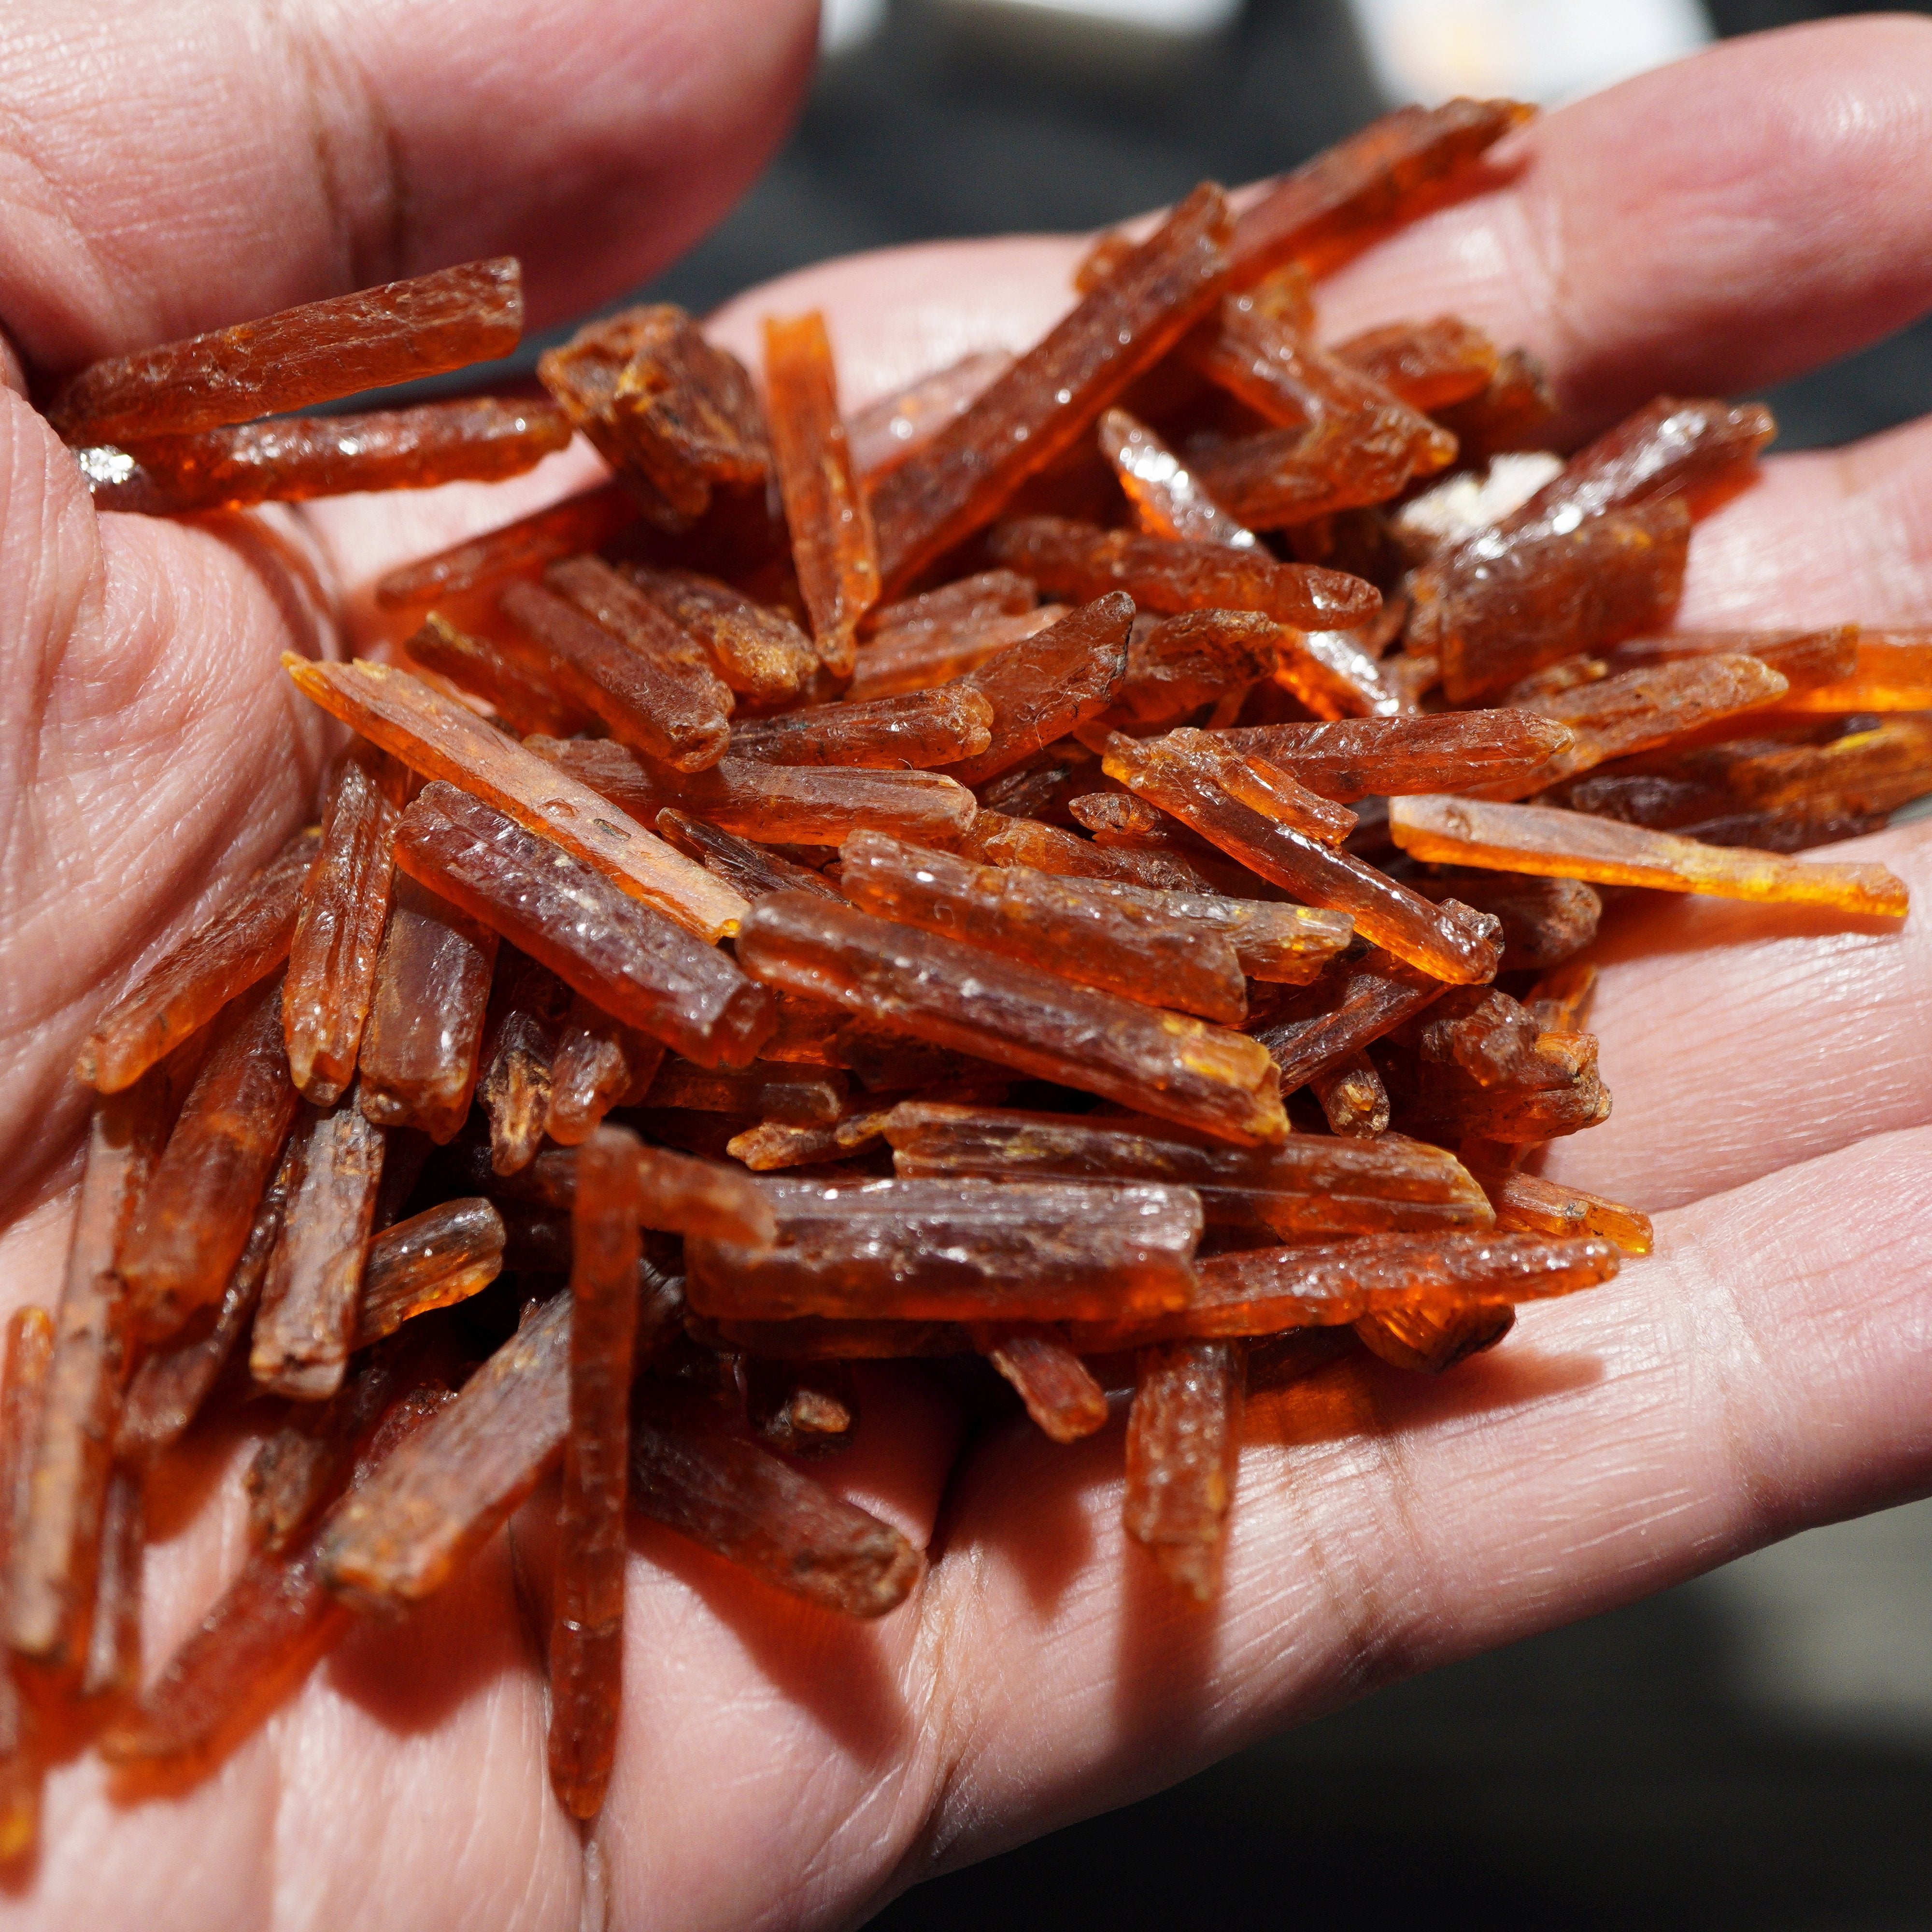 Superior Quality - Orange Kyanite Tanzania. 3.5Ct-10Ct Pieces @$7/stone On Blind Pour Basis. We